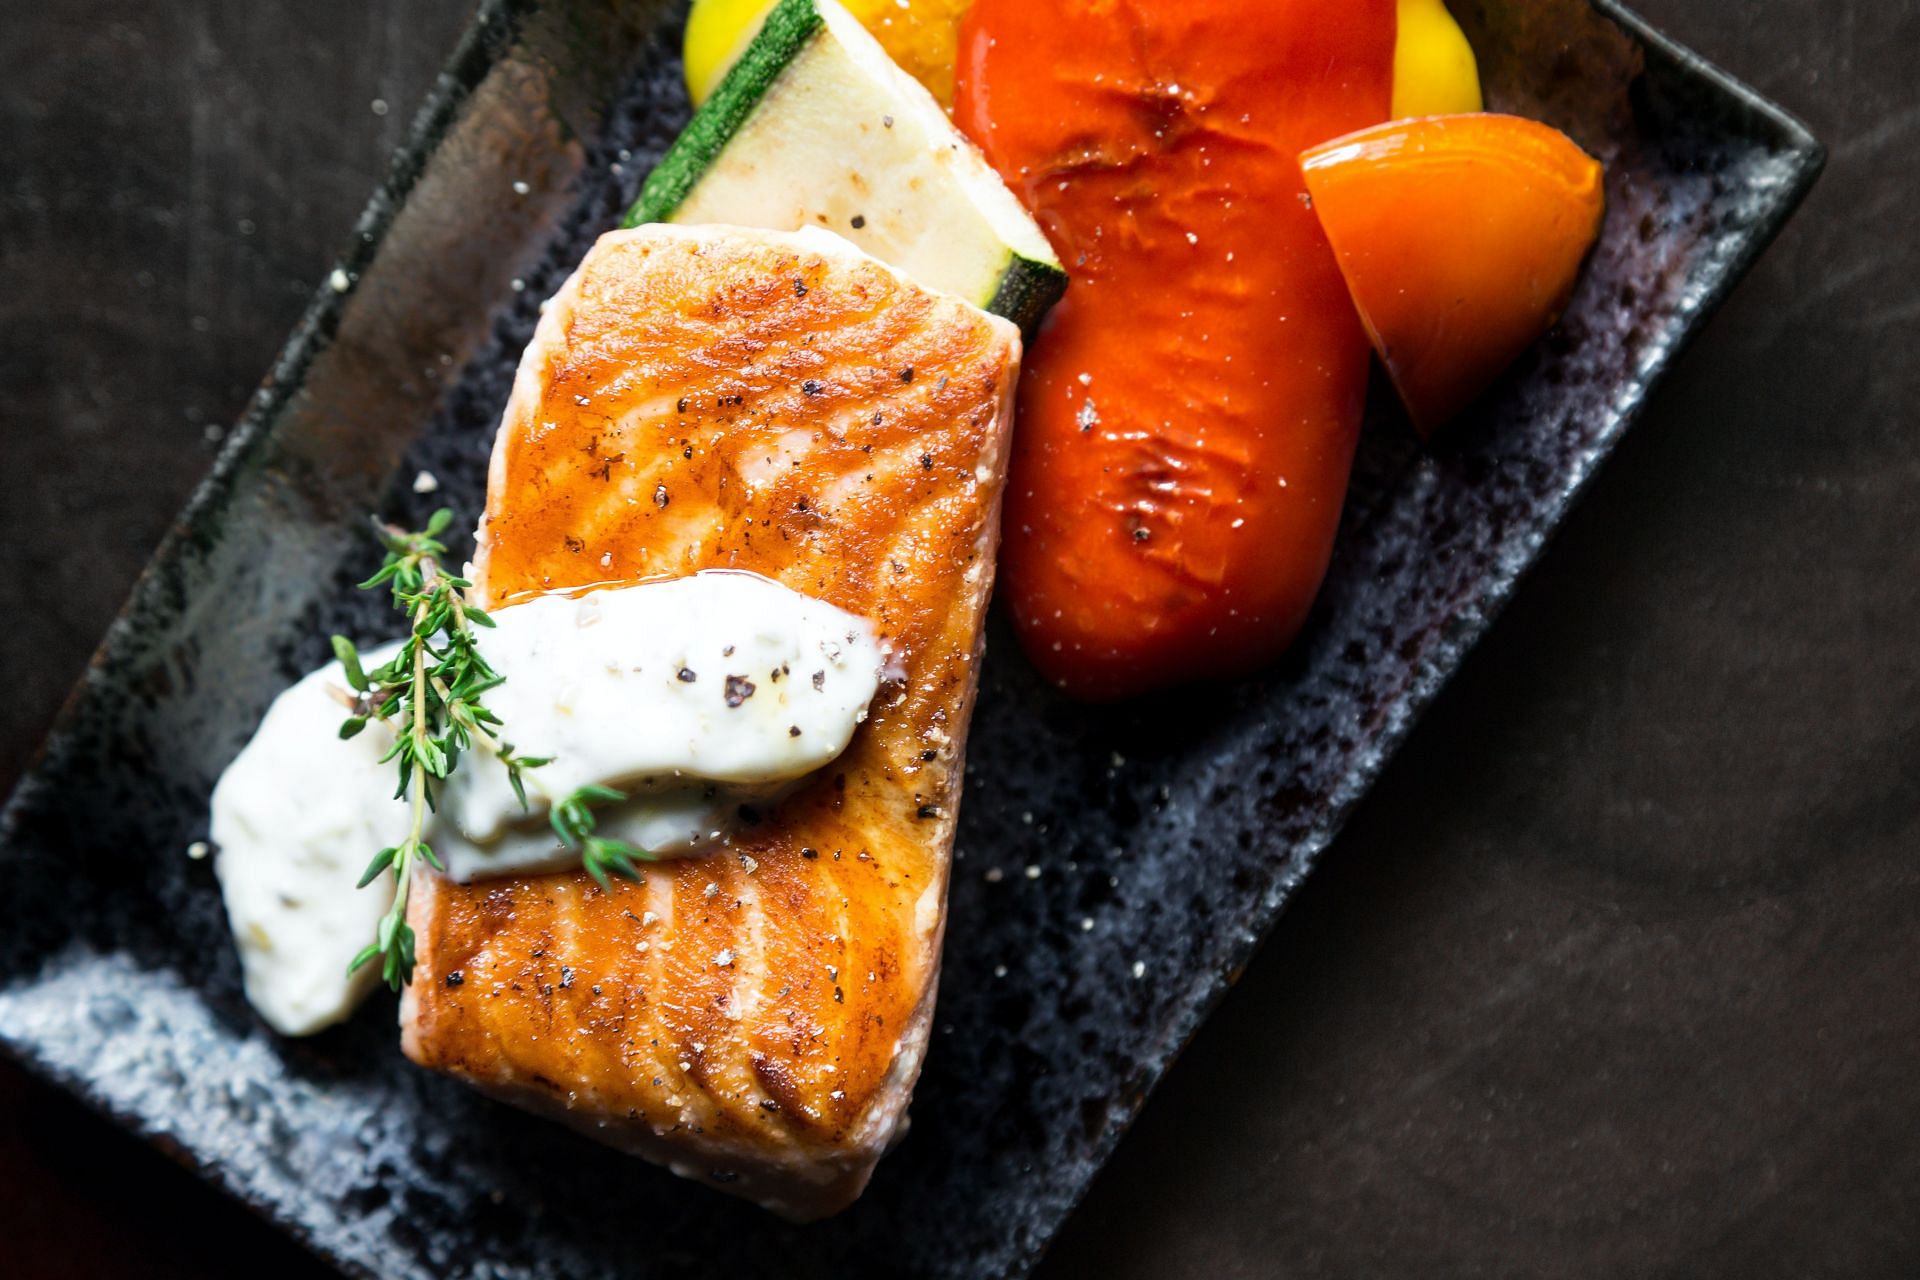 Oven-cooked salmon with grilled veggies. (Image via Pexels/ Malidate Van)